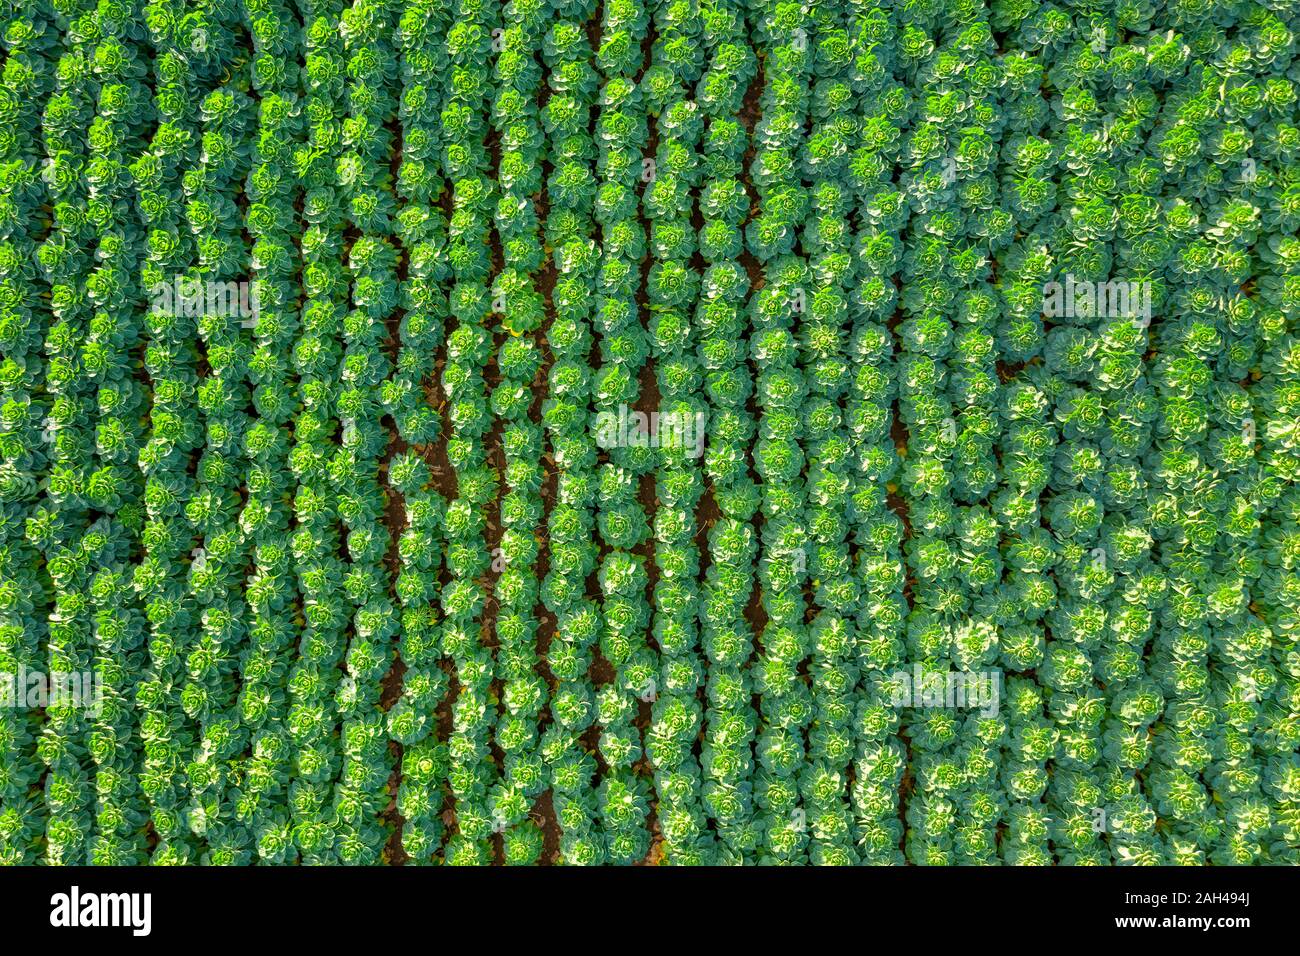 Scotland, East Lothian, Field of brussels sprouts (Brassica oleracea) Stock Photo